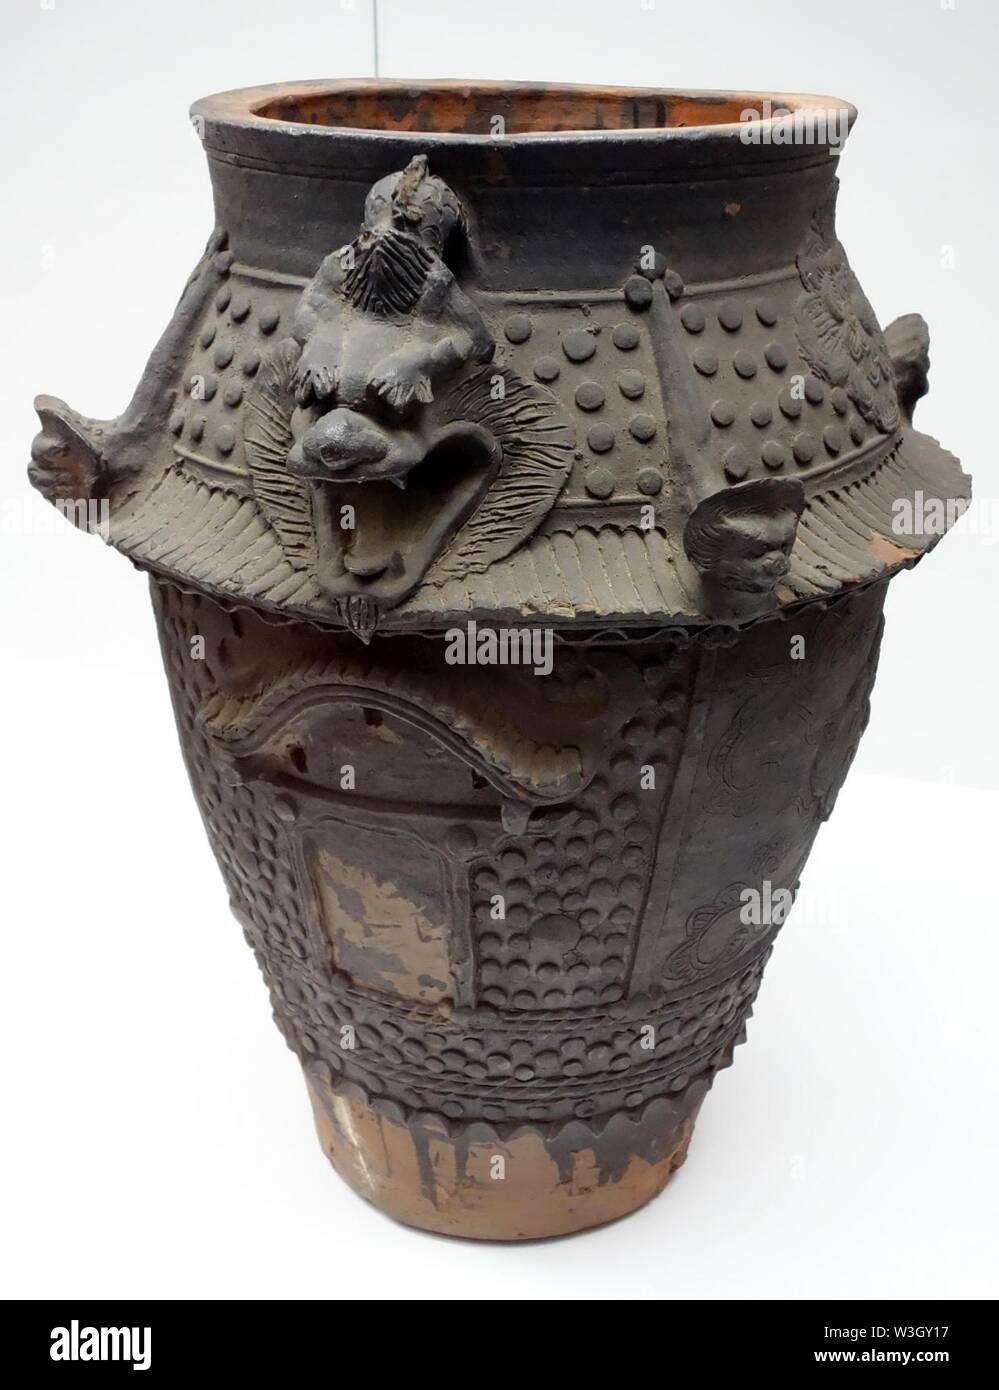 Cinerary Urn, Tsuboya ware, Okinawa Main Island, Second Sho Dynasty, Ryukyu Kingdom, 19th century, ceramics Stock Photo